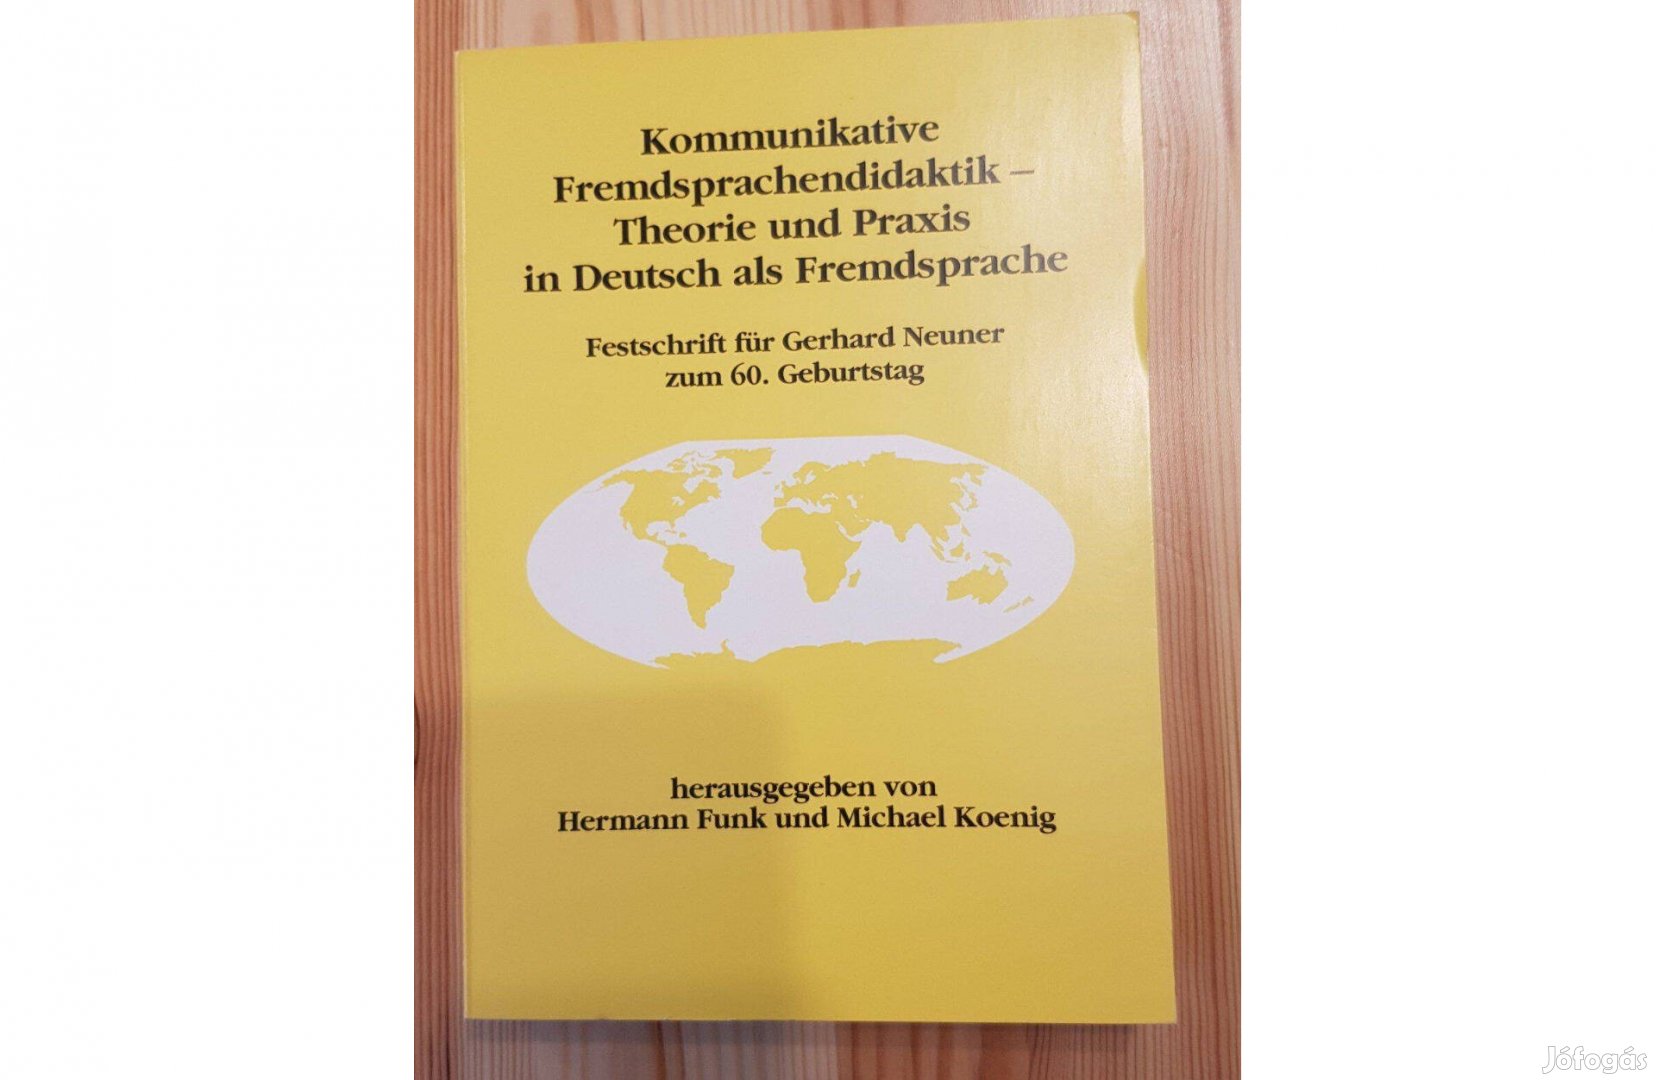 Kommunikative Fremdsprachendidaktik (Neuner, Koenig), német